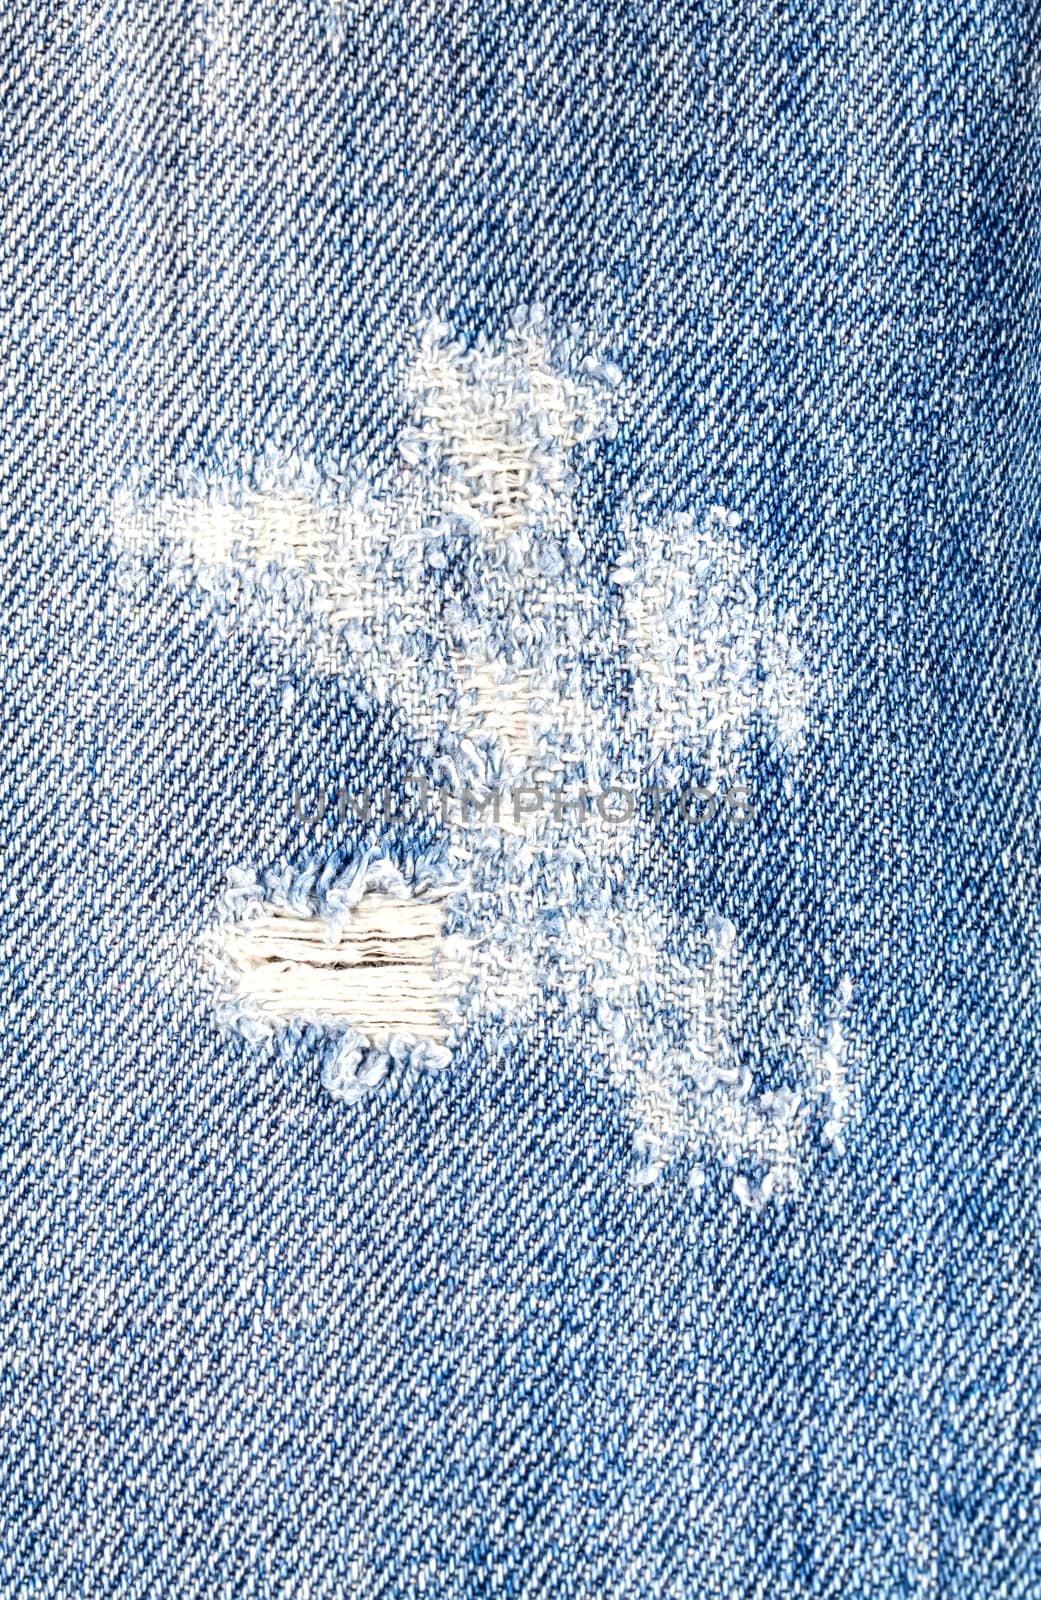 Hole on jeans denim fabric texture